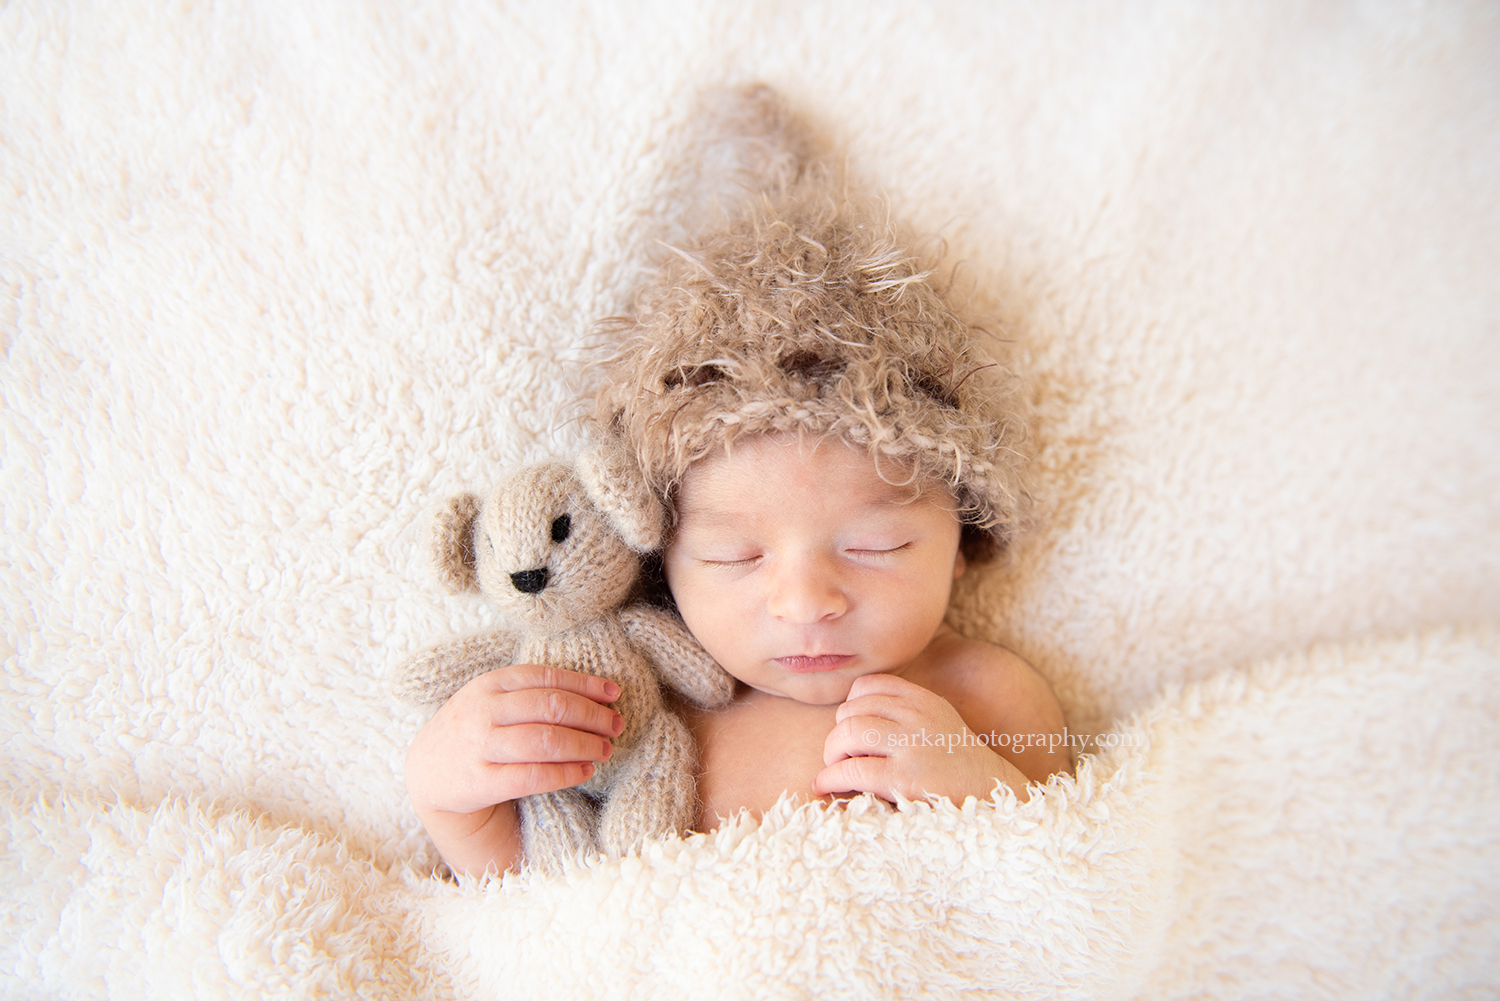 newborn baby boy snuggling with a teddy bear during his newborn photo session in Carpinteria